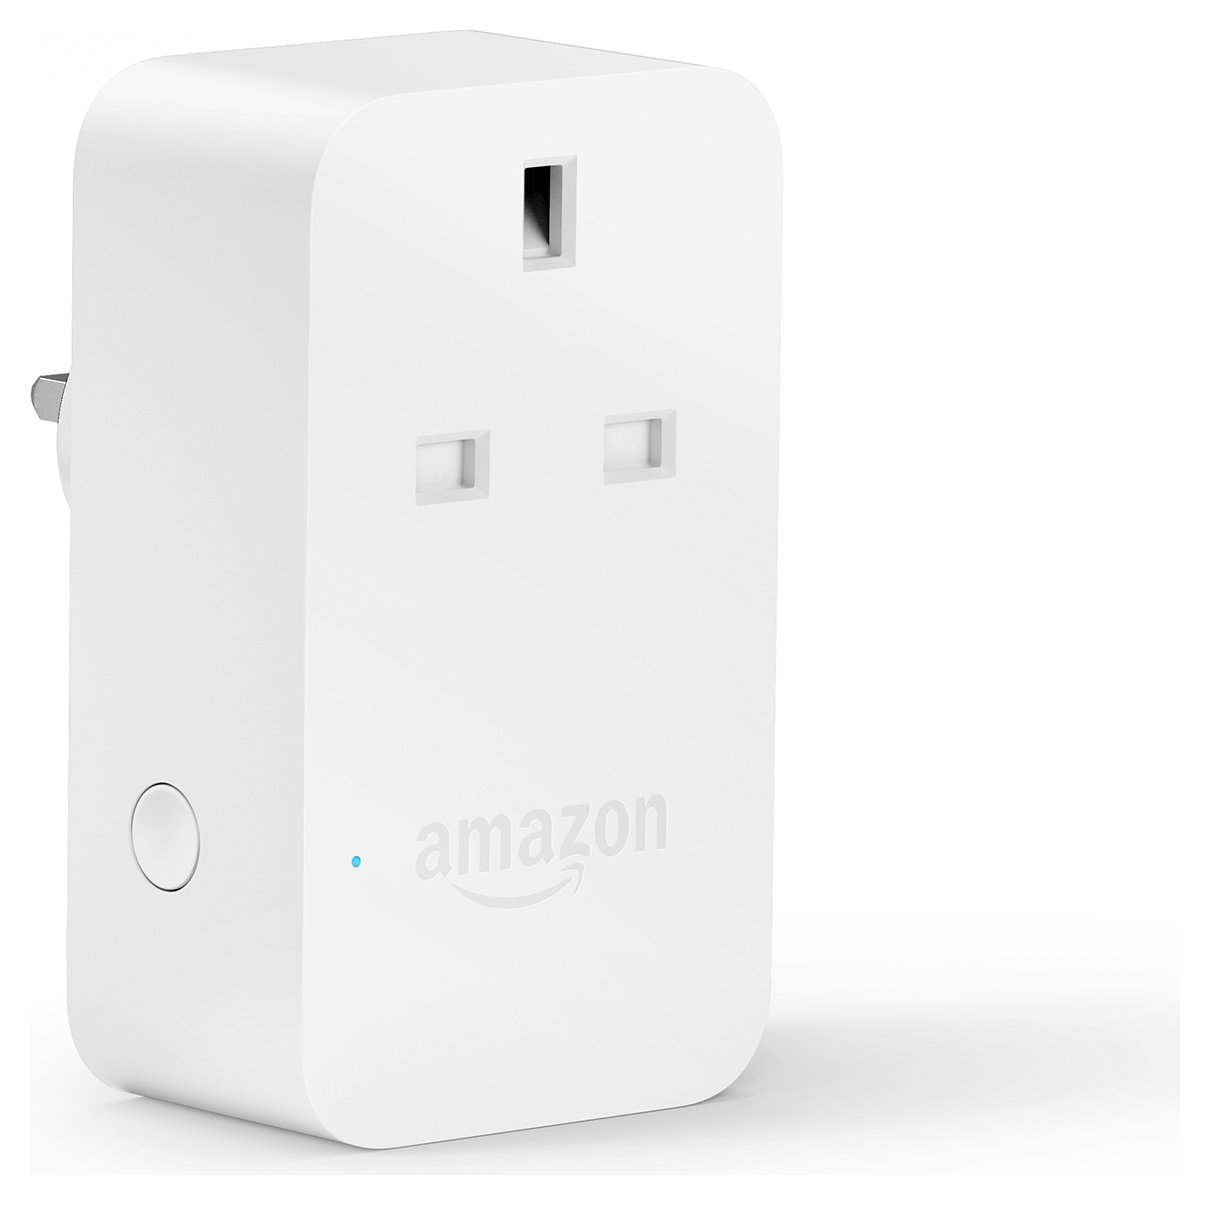 Amazon Smart Plug Review